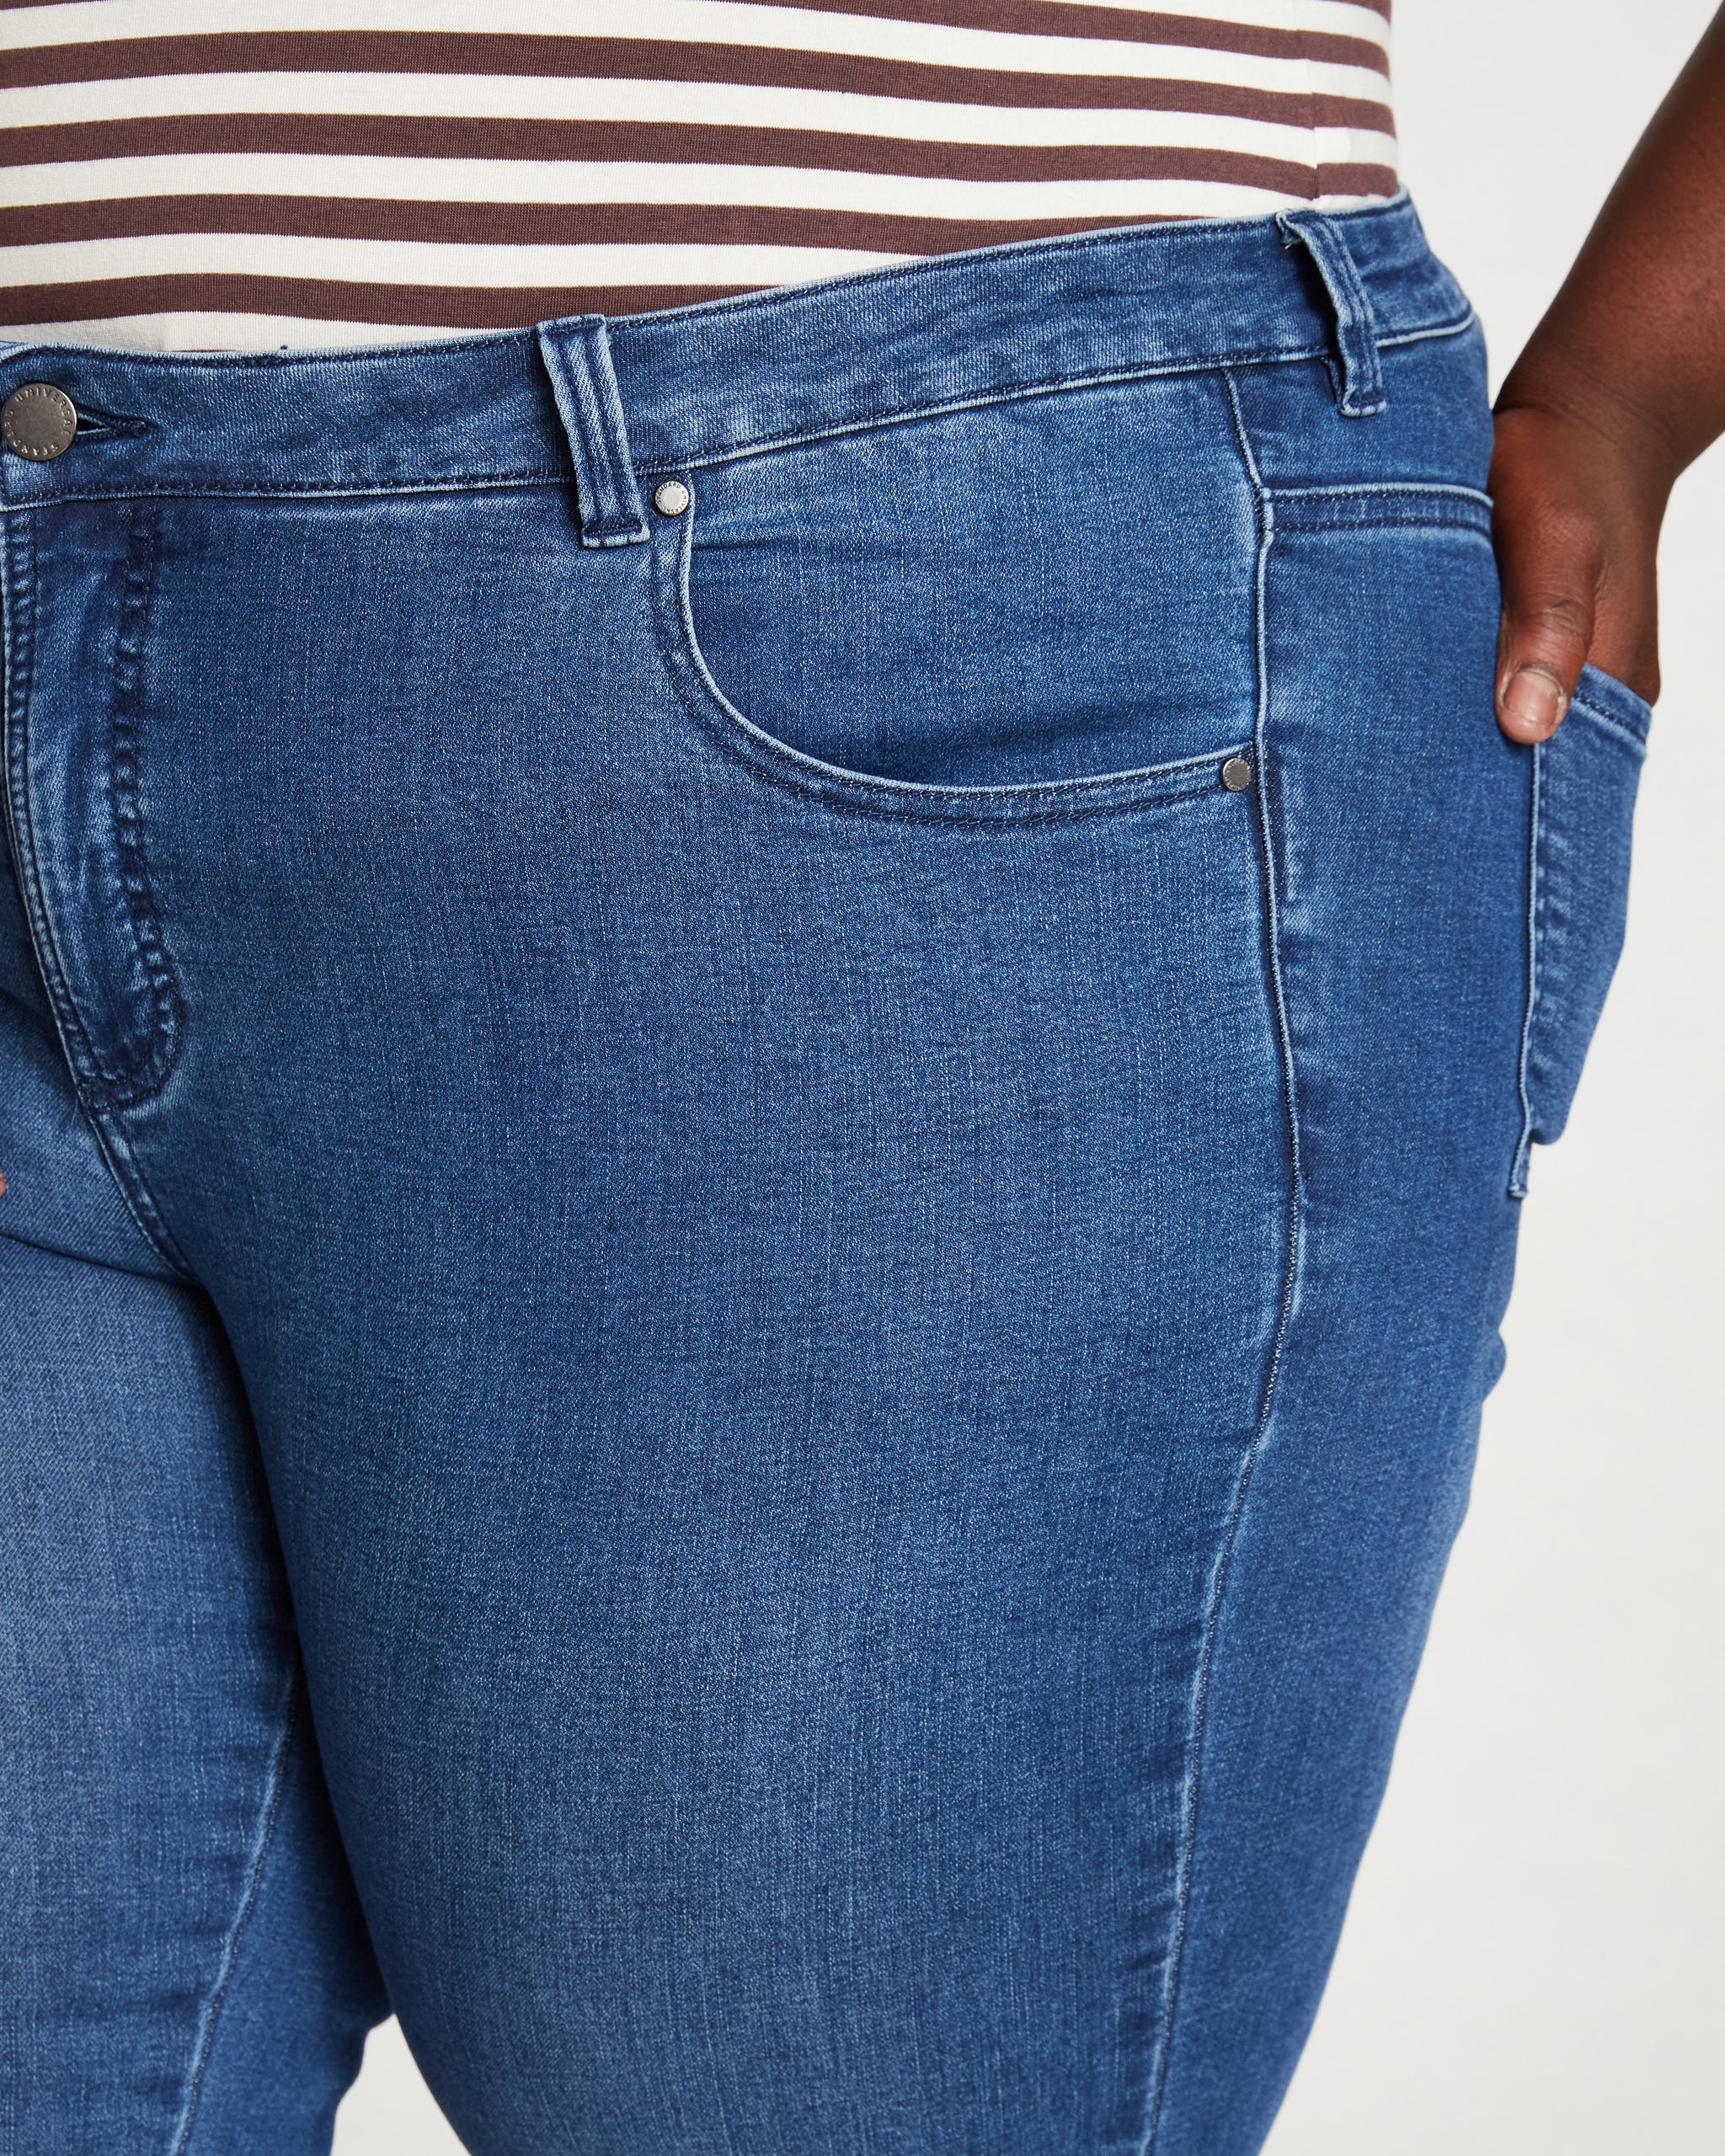 Seine High Rise Skinny Jeans 27 Inch - True Blue | Universal Standard